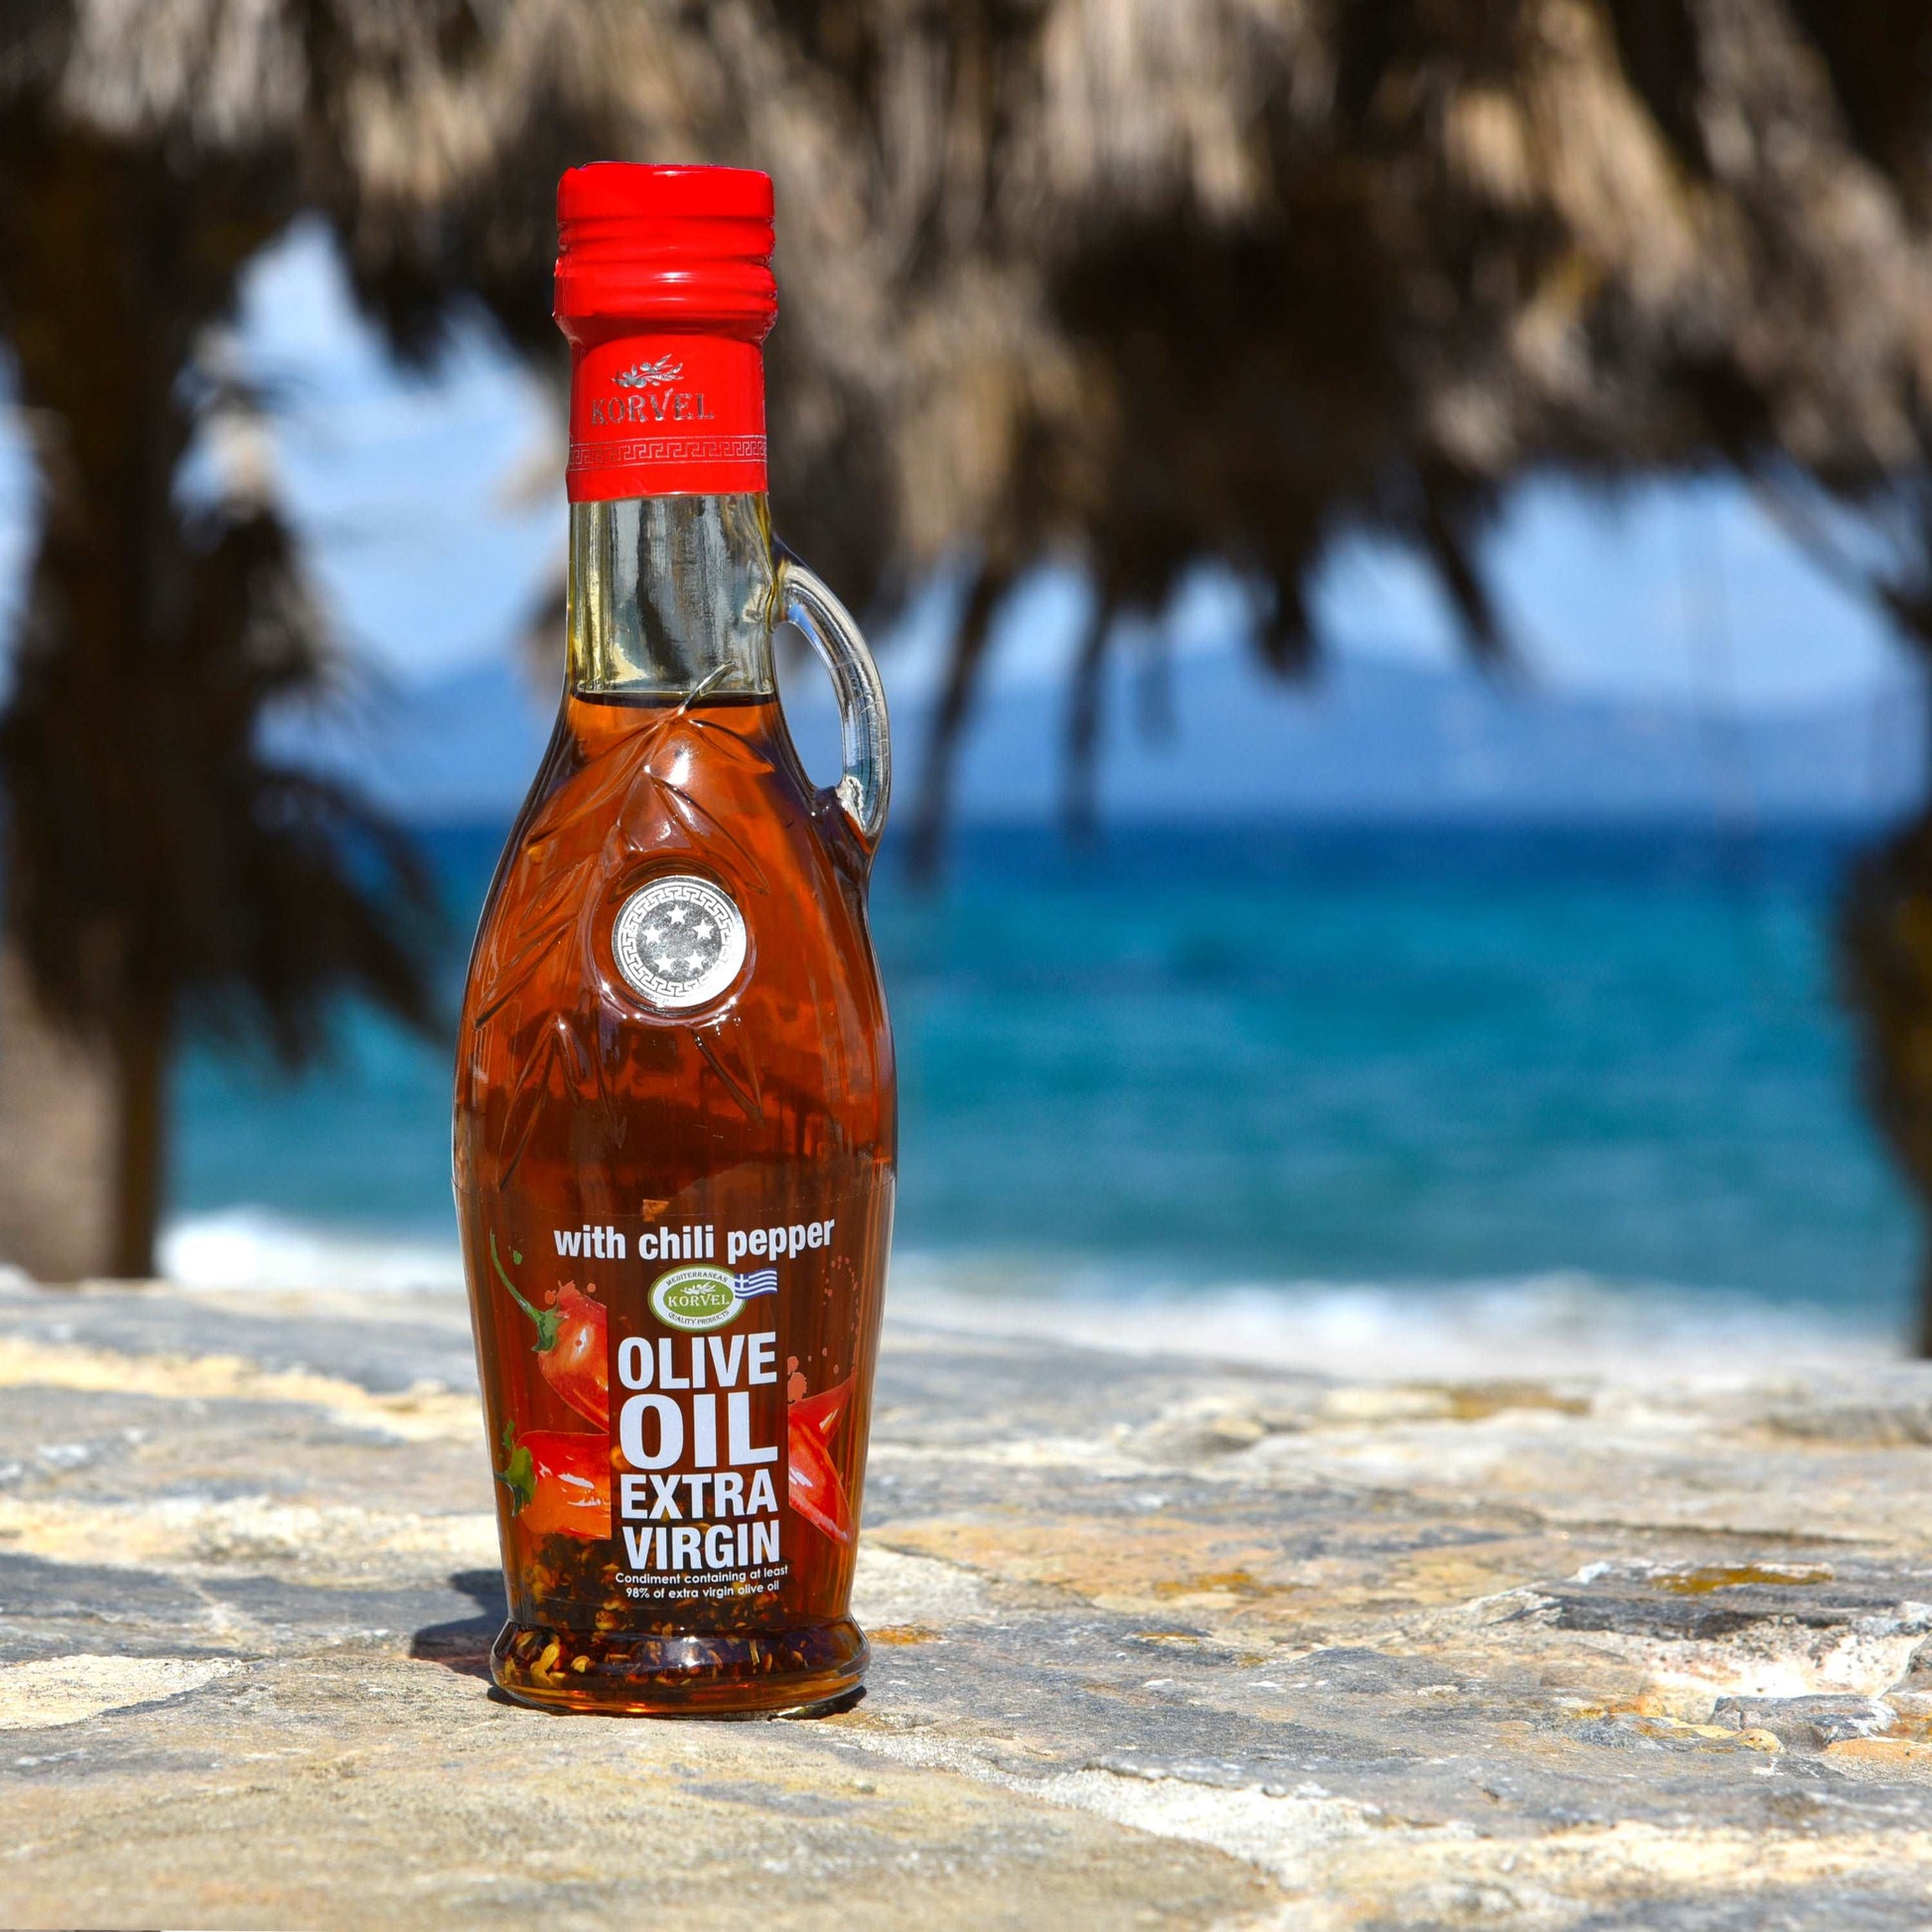 KORVEL Greek Extra Virgin Olive oil, 250 ml with Chili